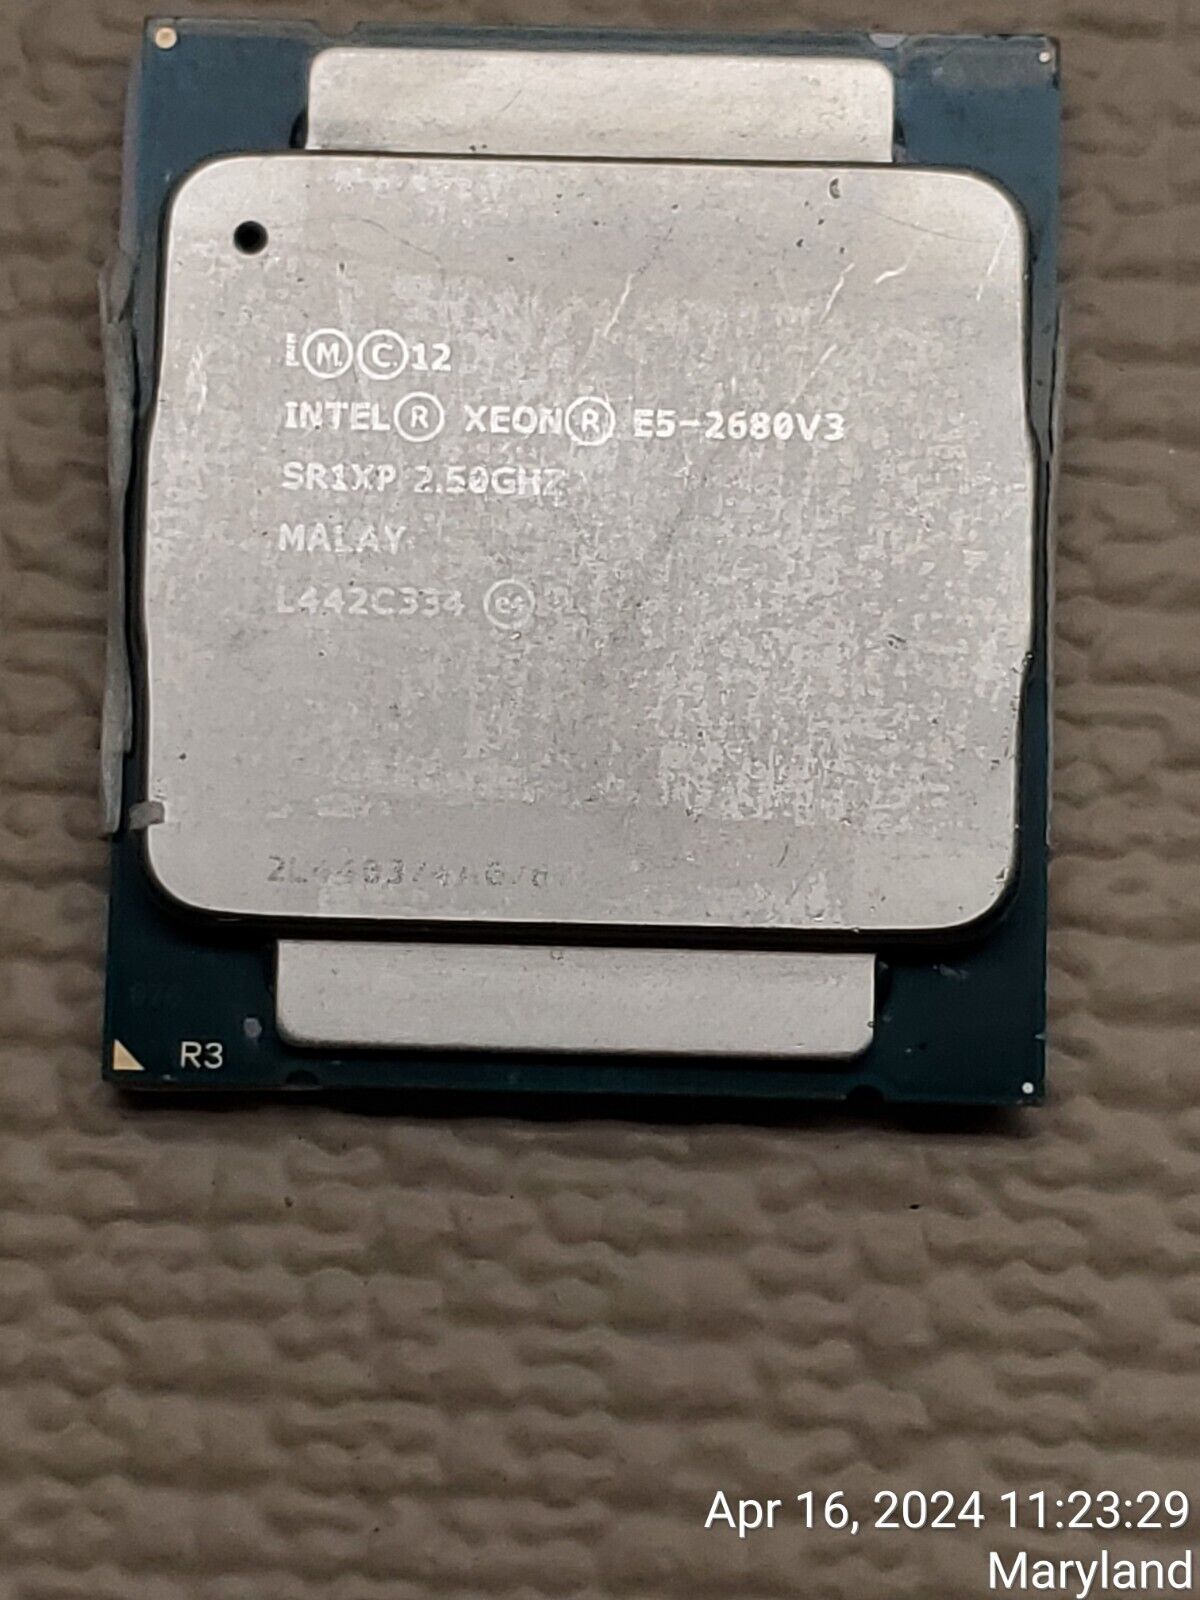 Lot of 10 Intel Xeon E5-2680 V3 SR1XP 12 Core 2.50GHz LGA 2011-3 CPU Processor